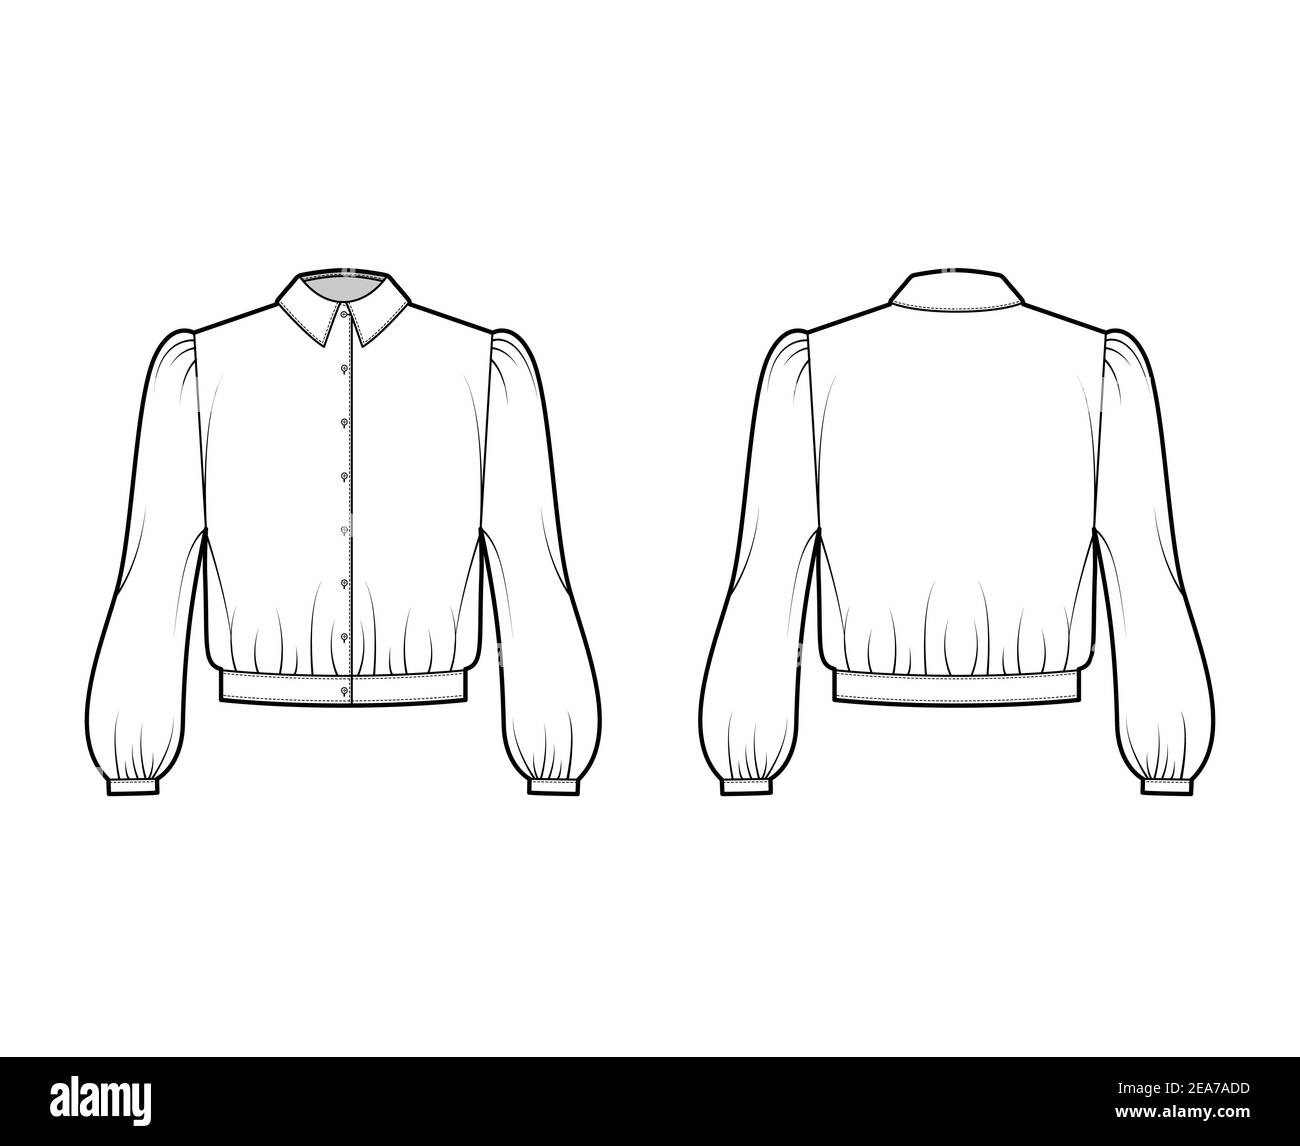 Blouson blouse technical fashion illustration with bouffant long ...